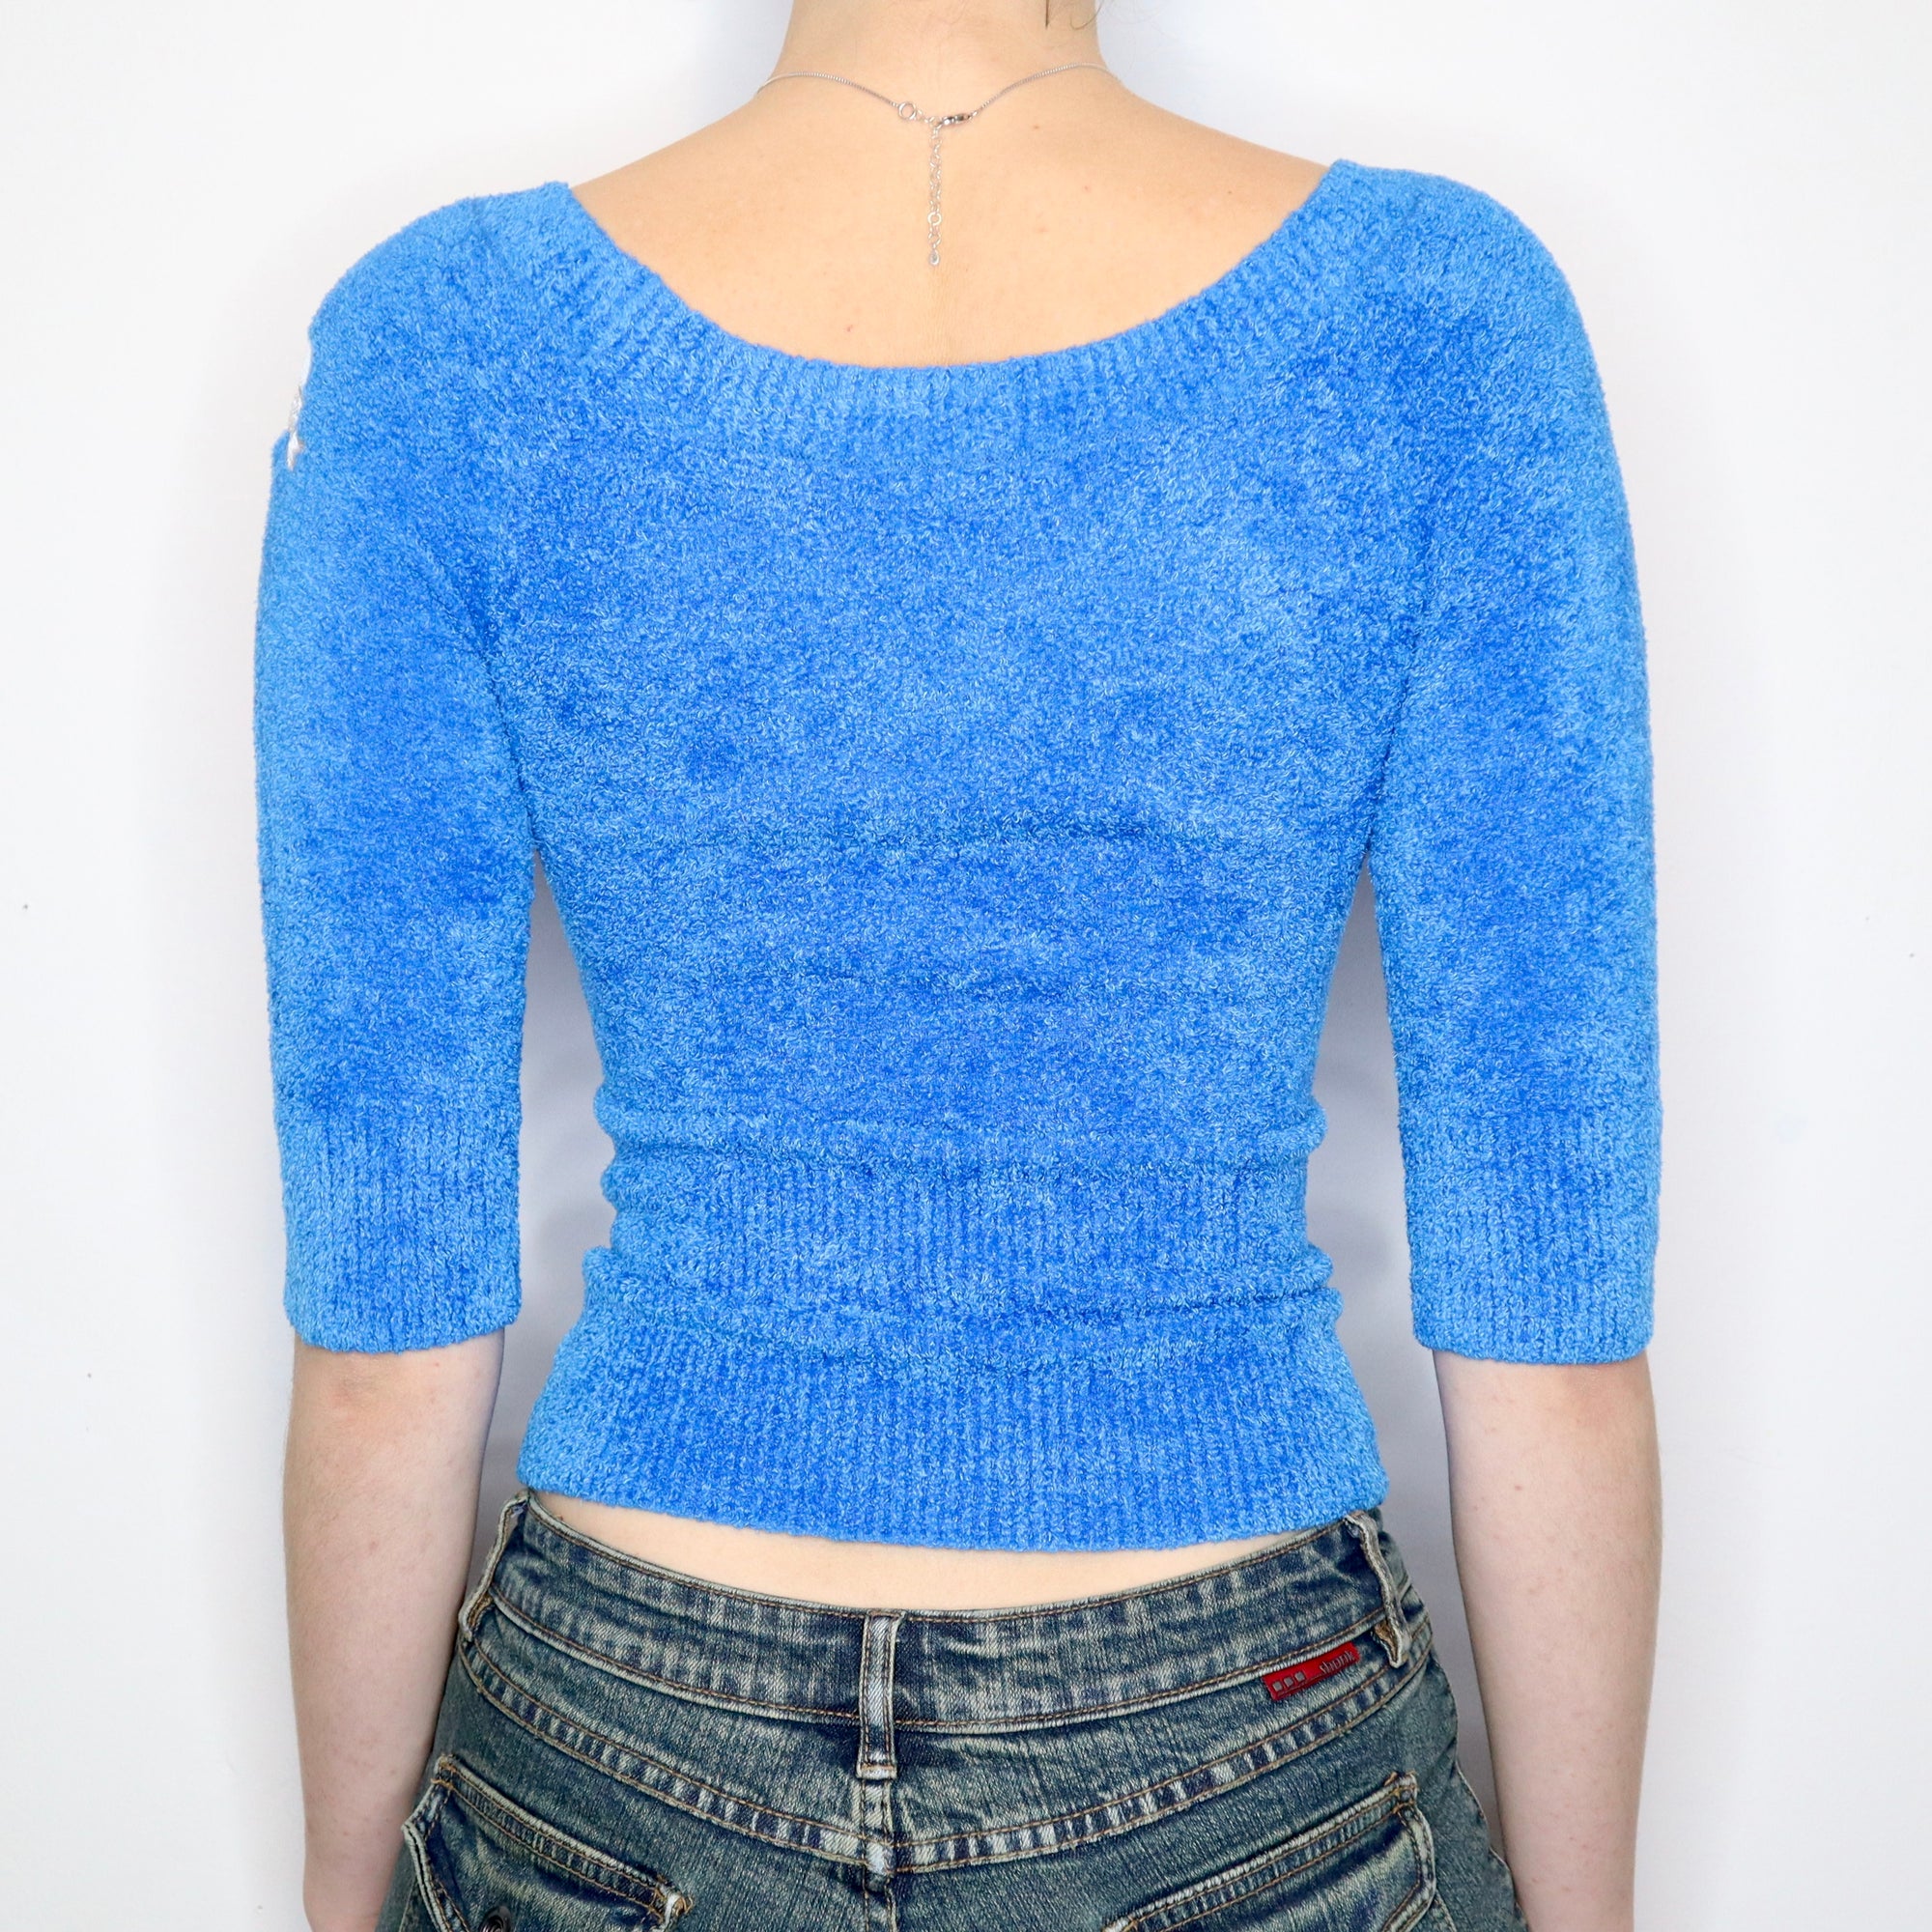 Fuzzy Bright Blue Sweater